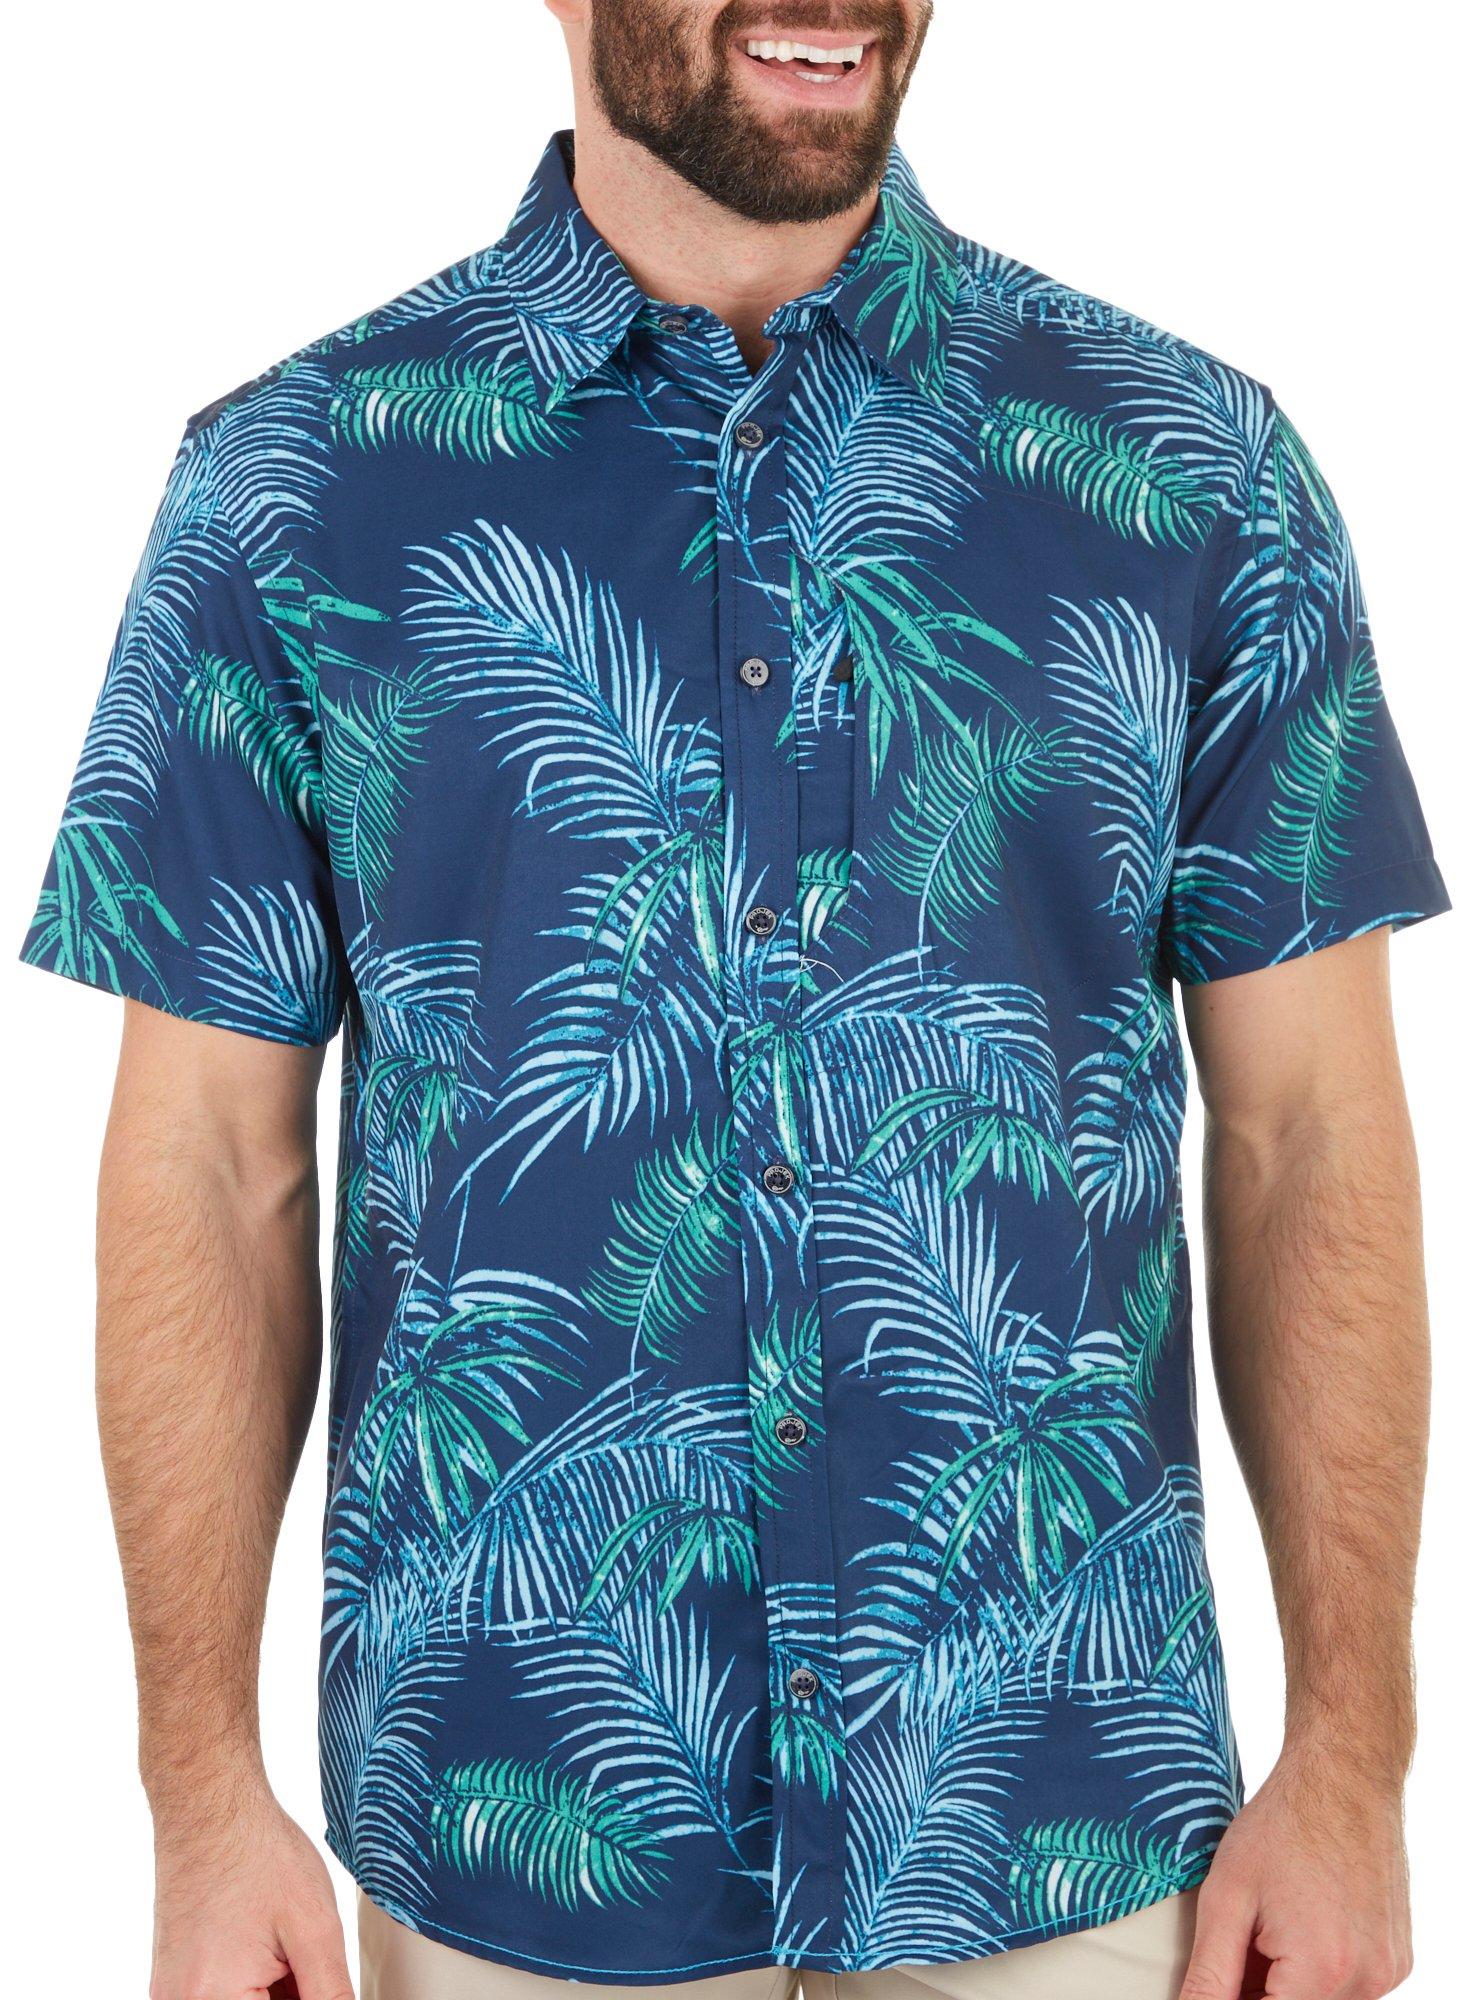 PROJEK RAW Mens Tropical Palm Leaves Short Sleeve Shirt